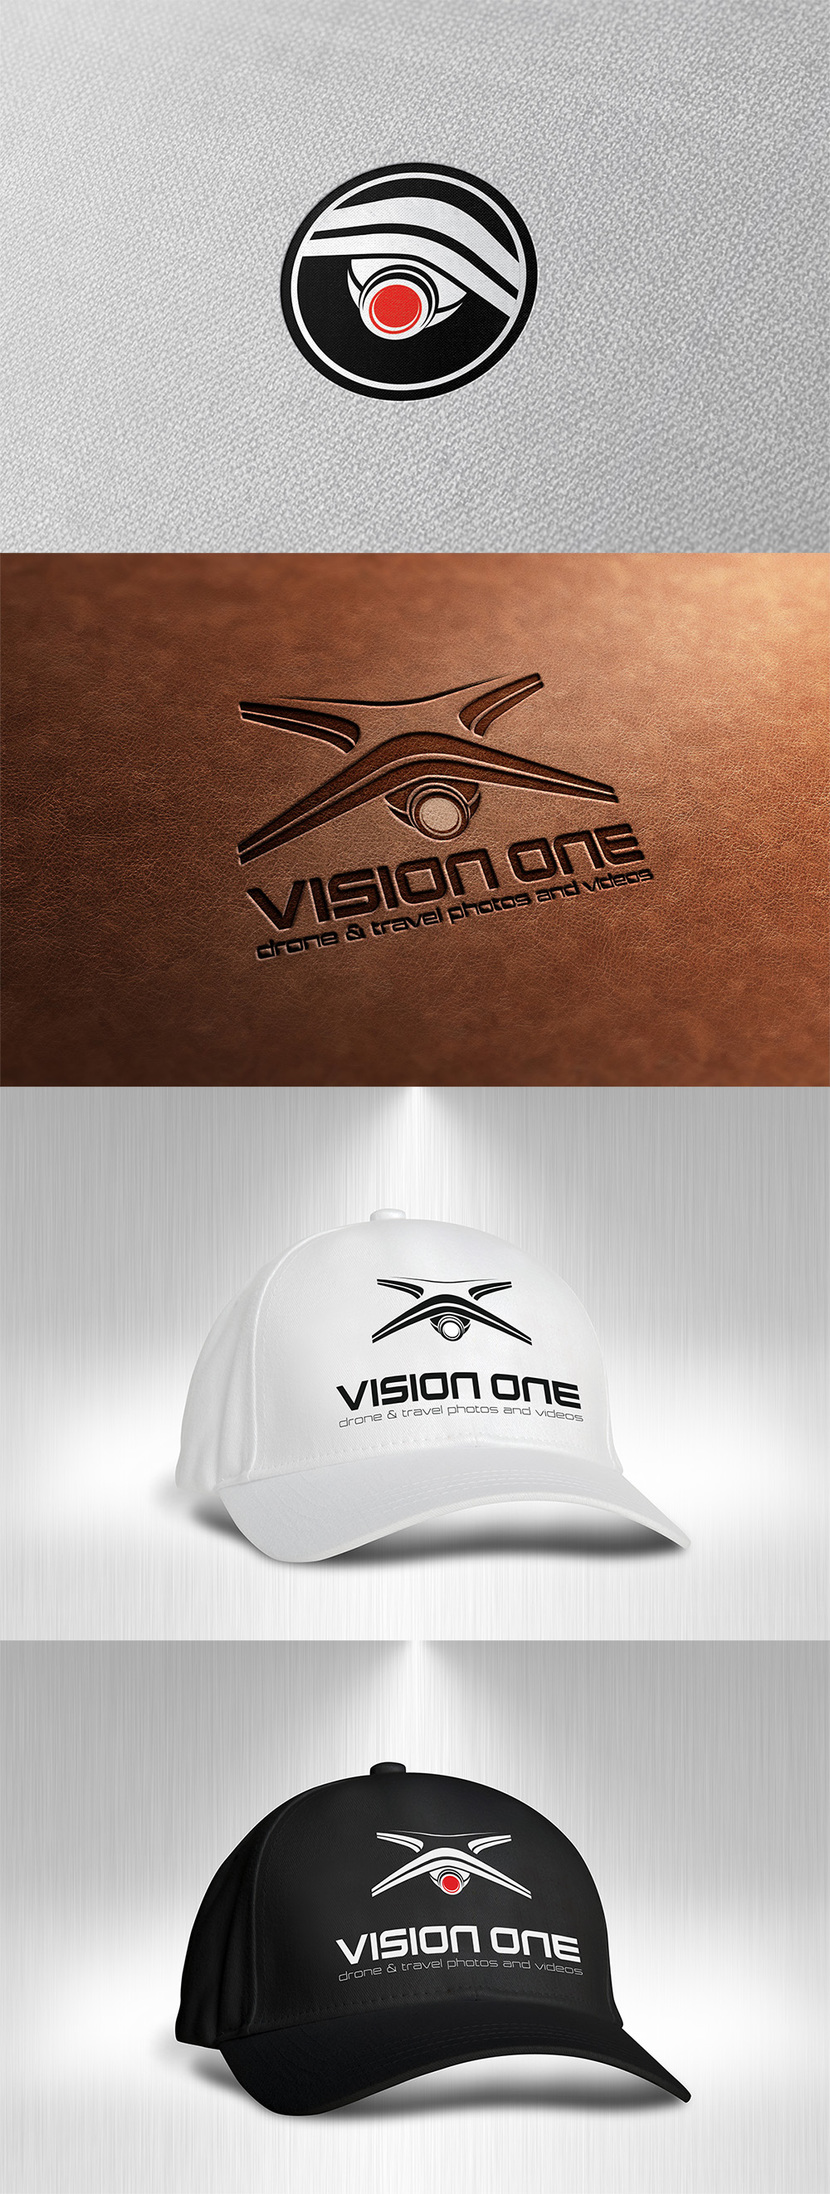 + - Разработка фирменного стиля проекта Vision One